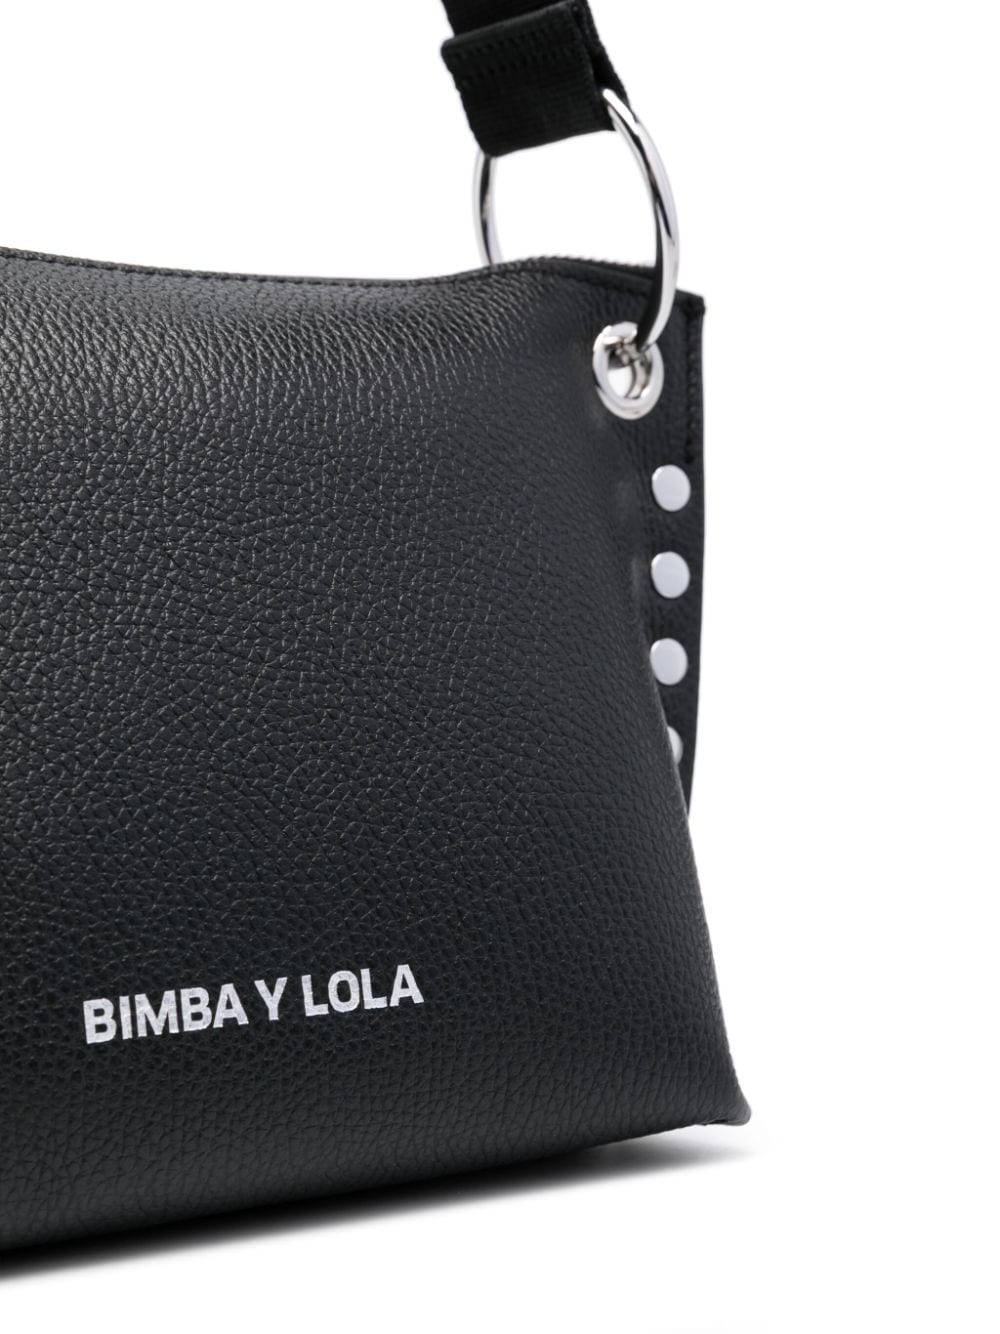 Bimba y Lola medium leather trapezium bag